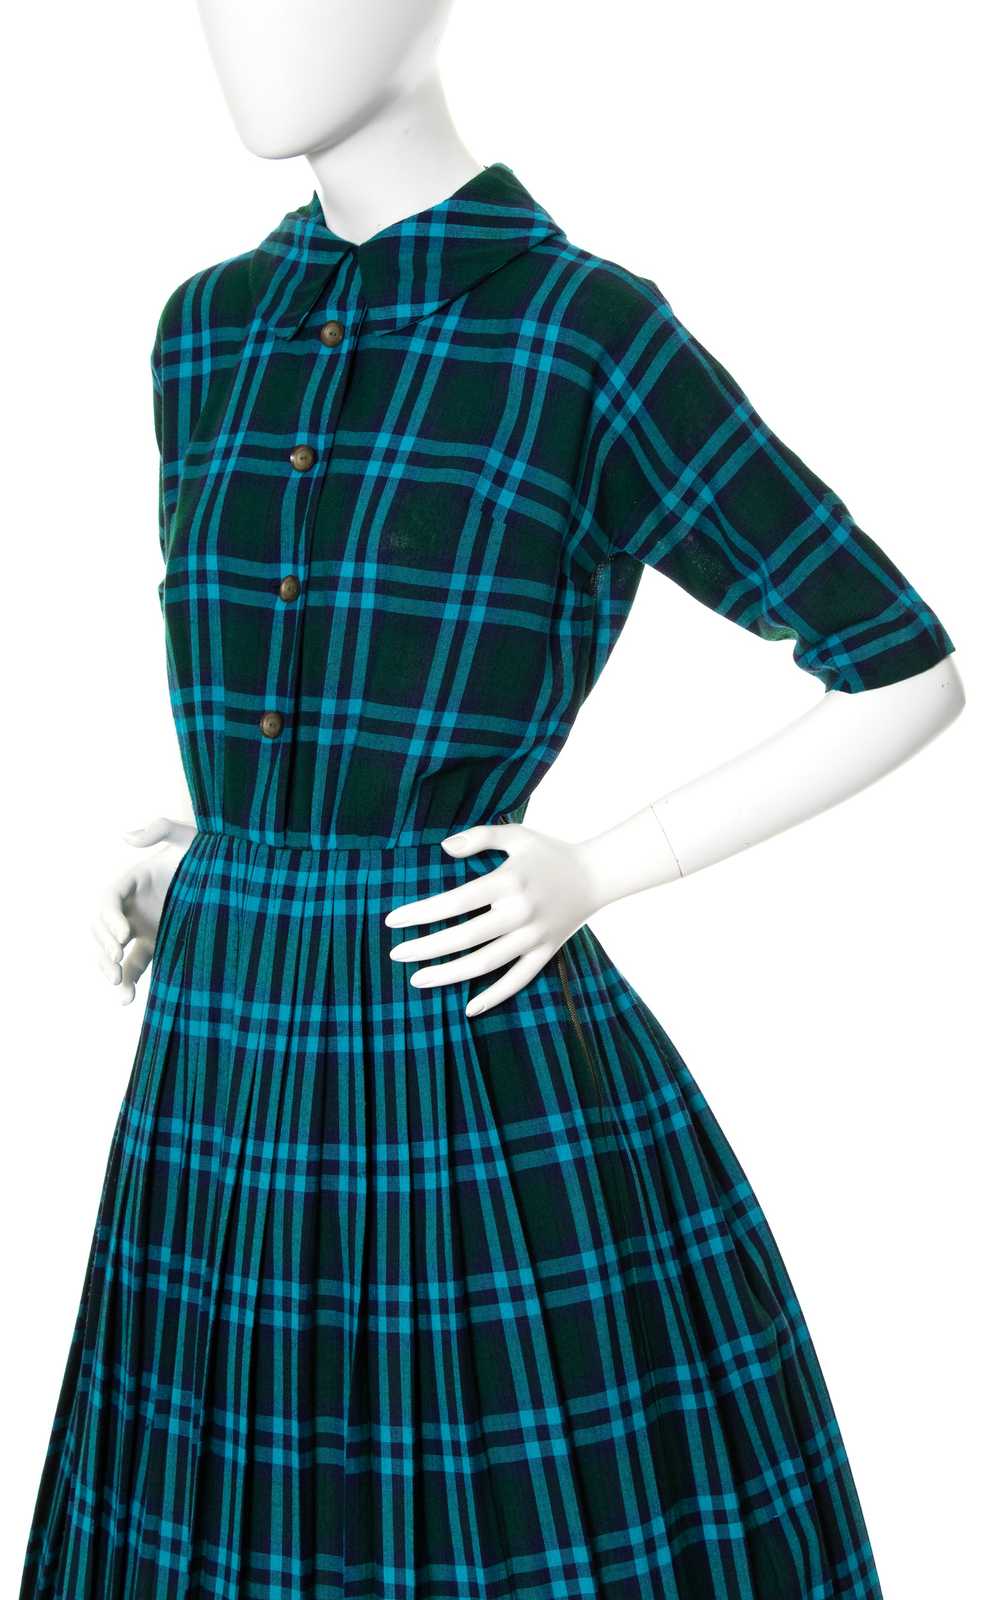 1950s Plaid Wool Shirtwaist Dress | x-small/small - image 5